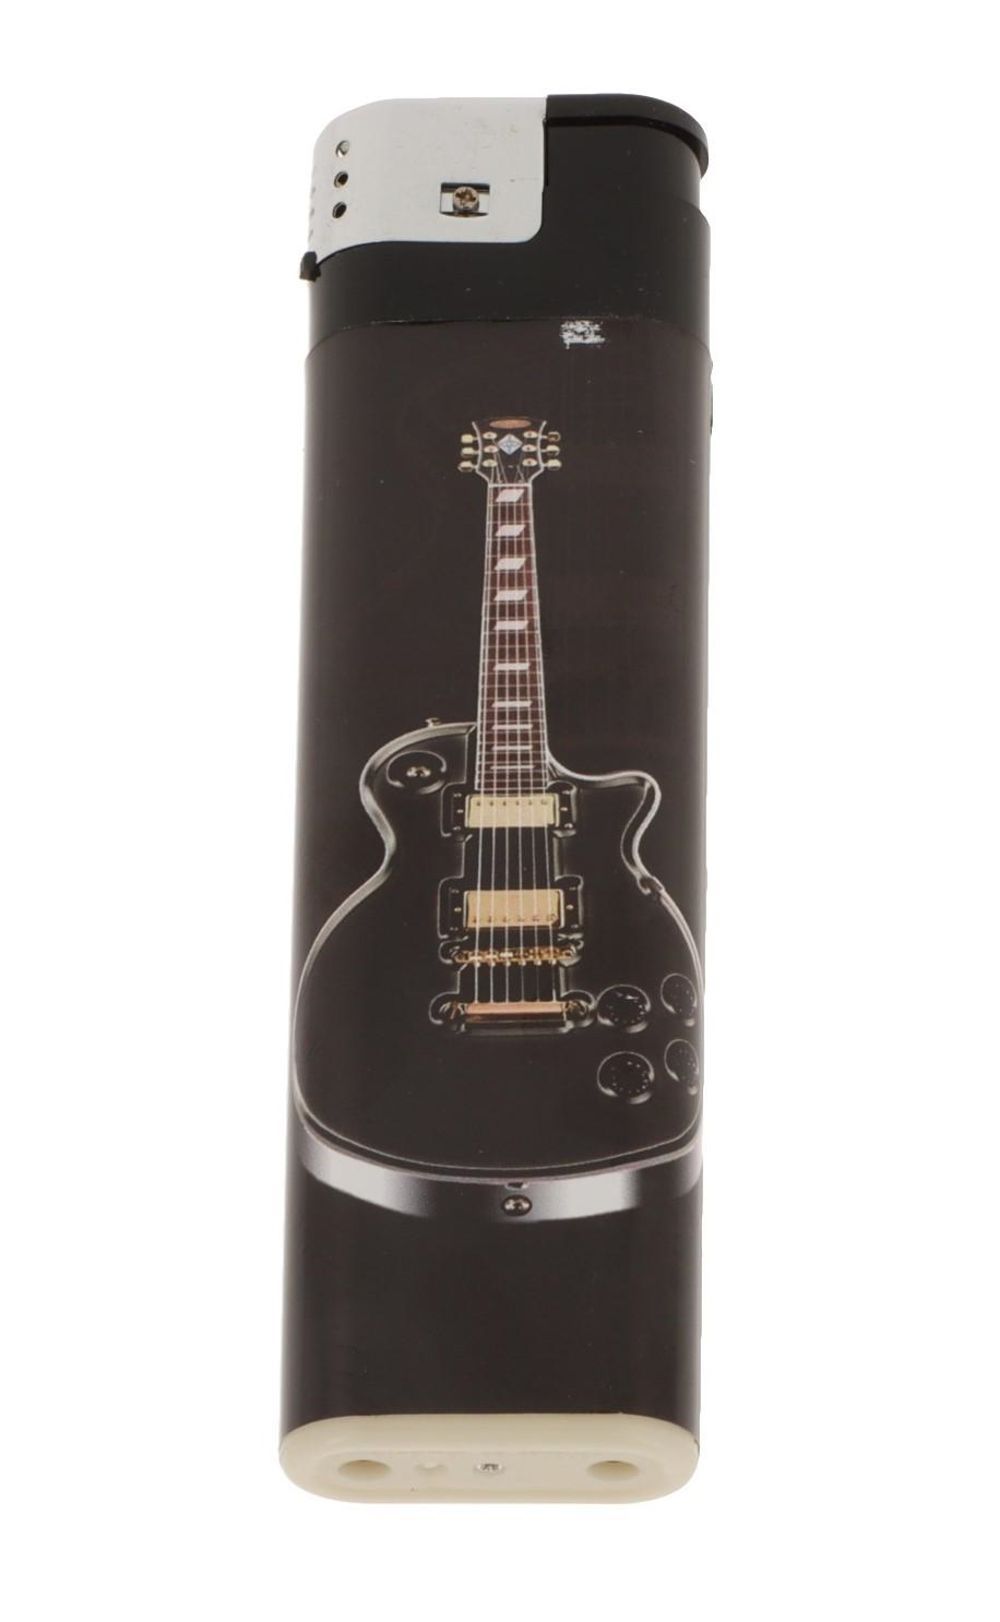 Elekronisches Feuerzeug mit E-Gitarre Giant XL - 16 cm Motiv: E-Gitarre 